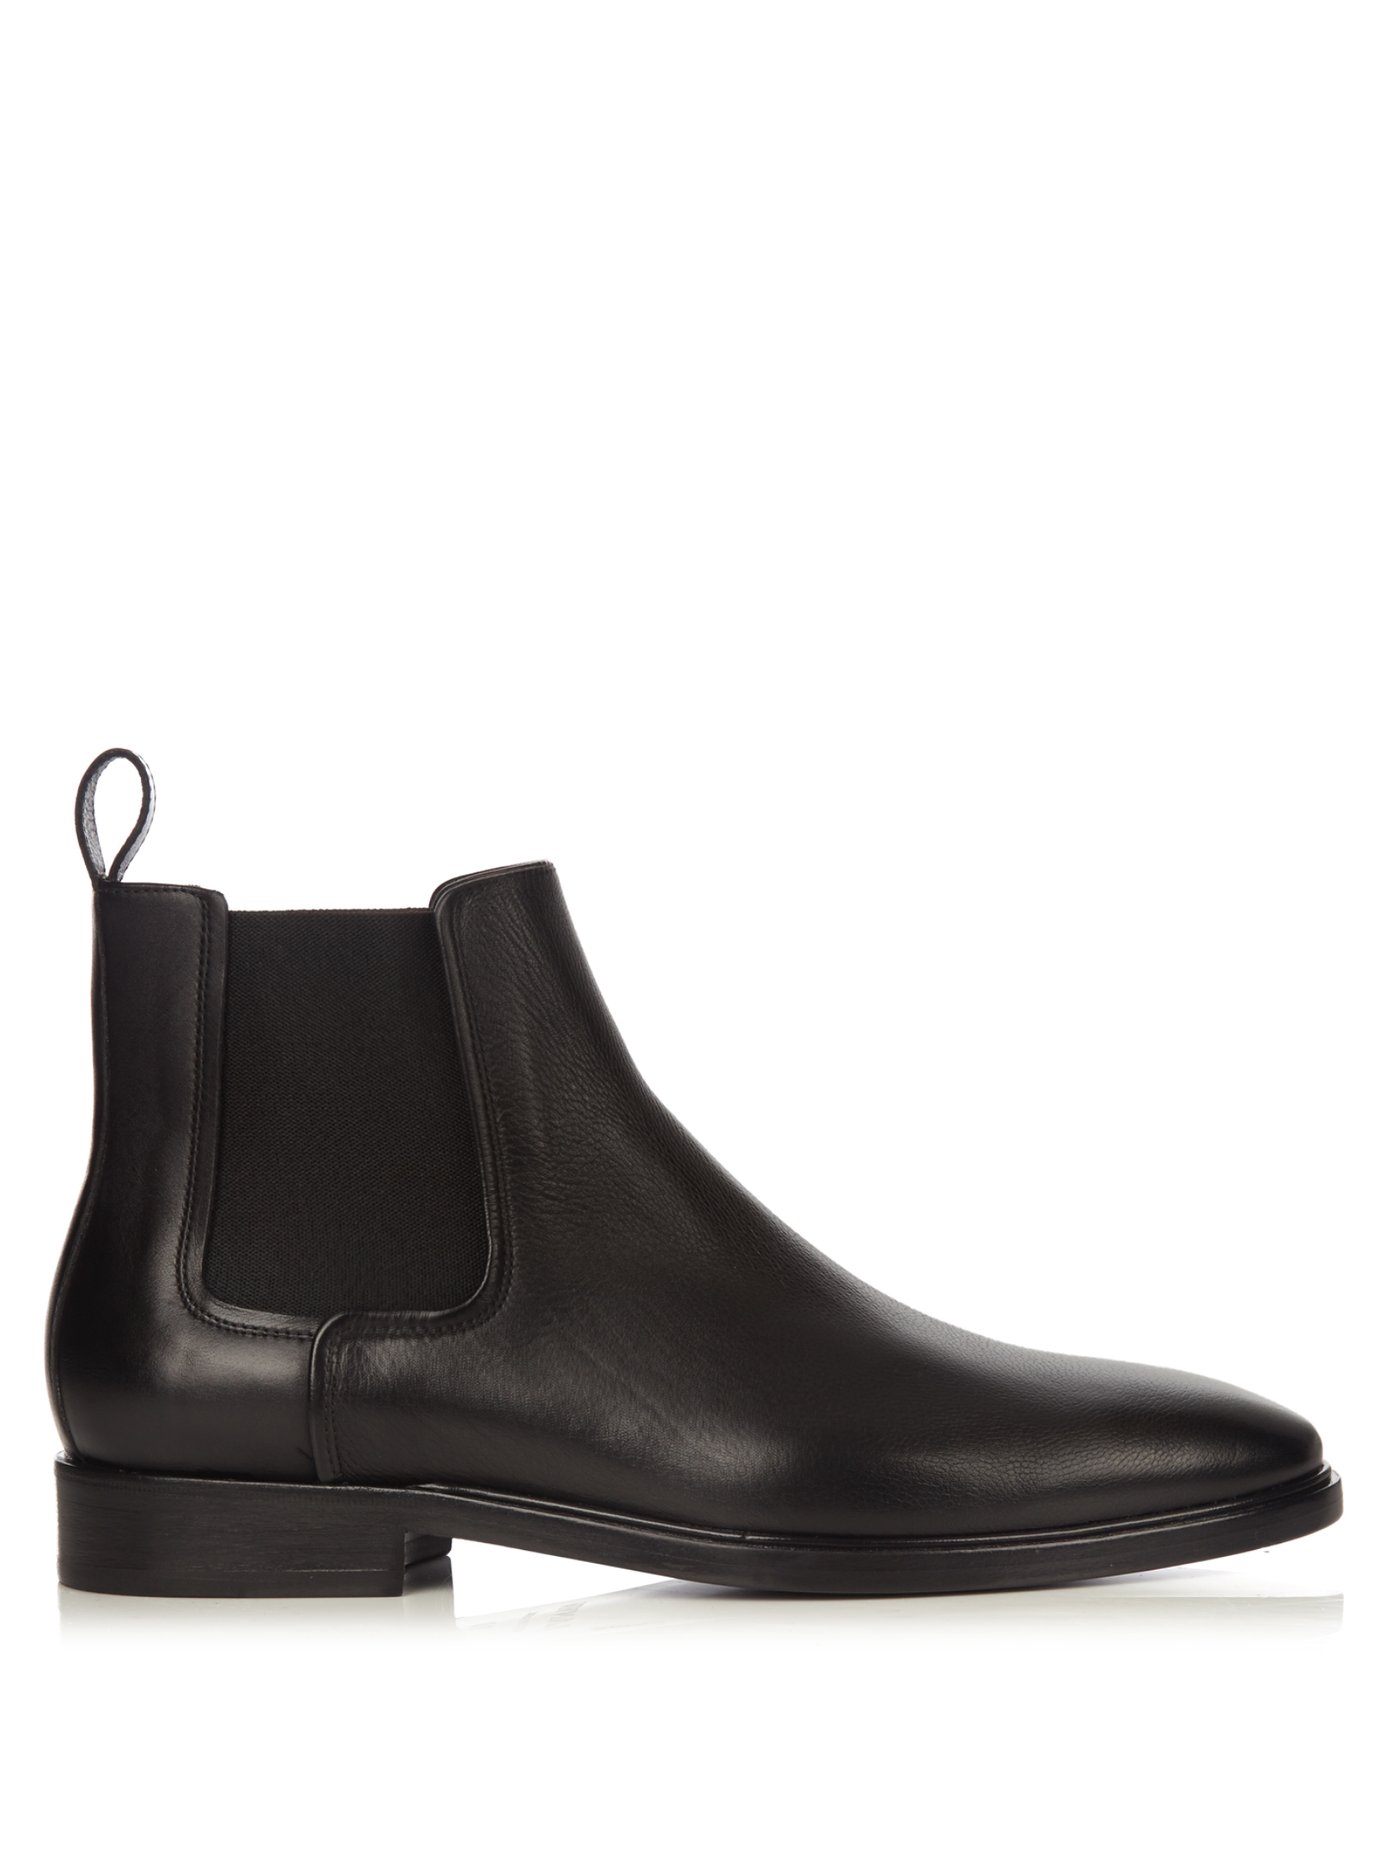 Dual-leather chelsea boots | Lanvin 